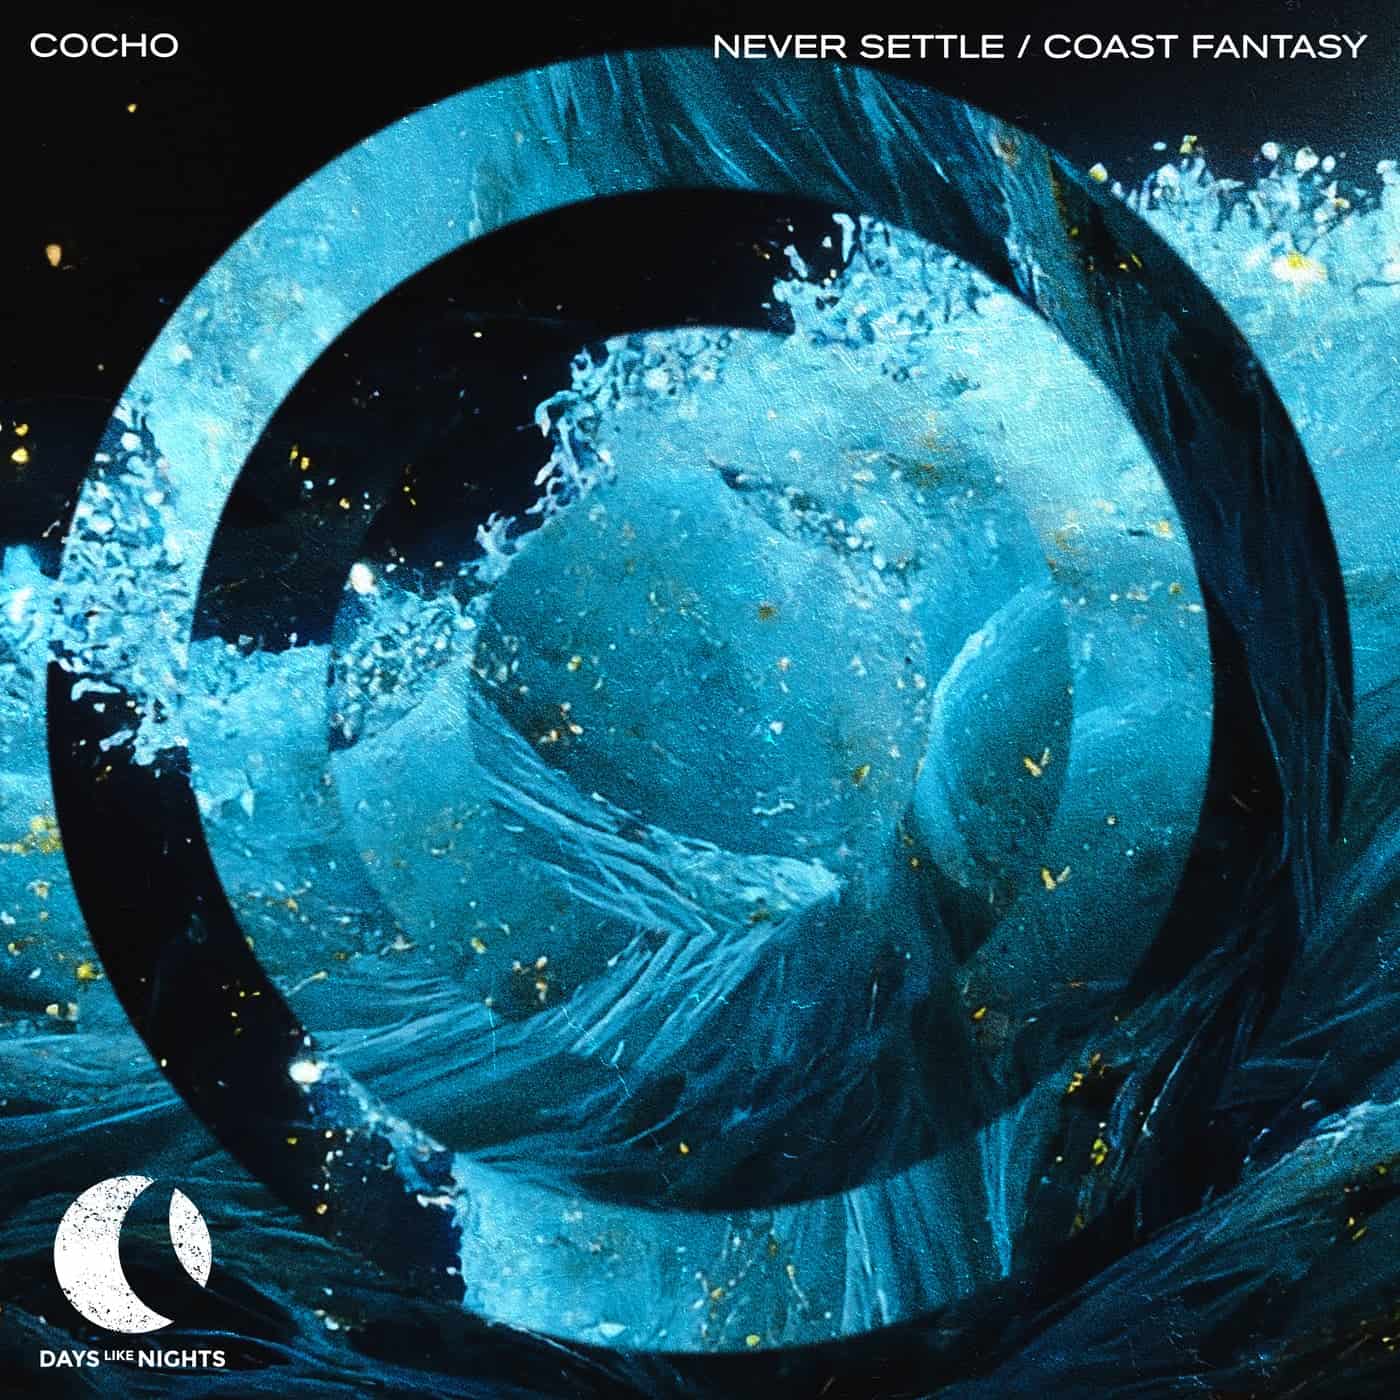 Download Cocho - Never Settle / Coast Fantasy on Electrobuzz